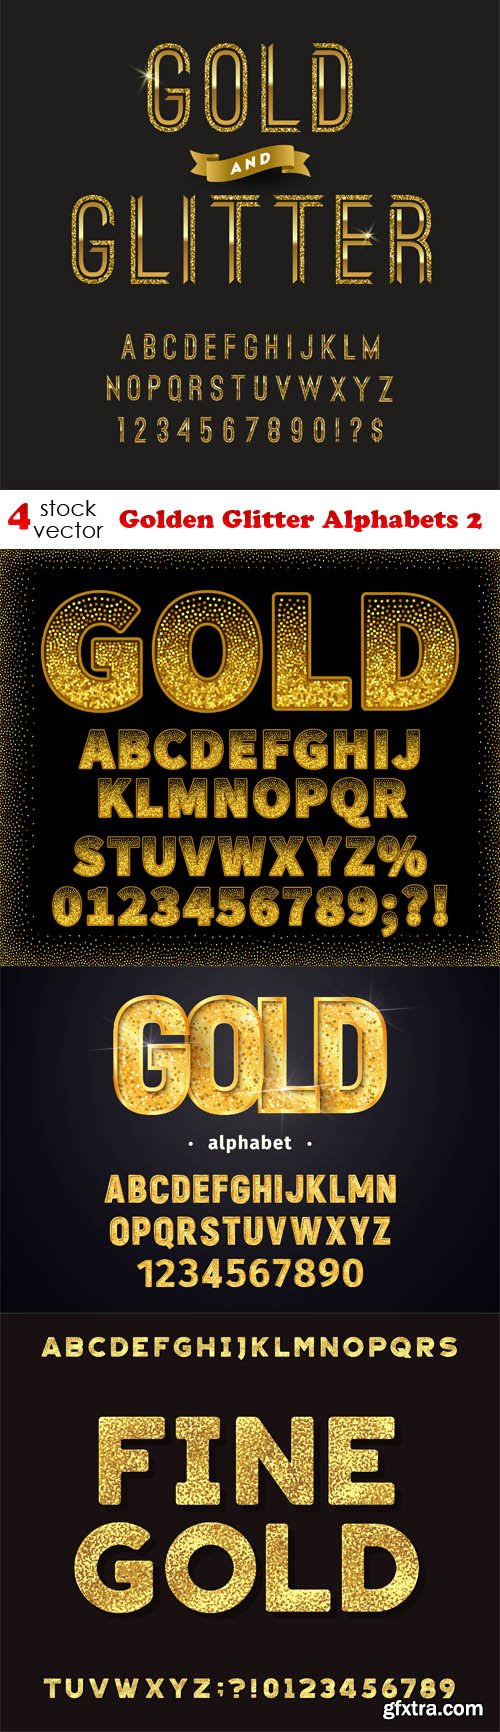 Vectors - Golden Glitter Alphabets 2